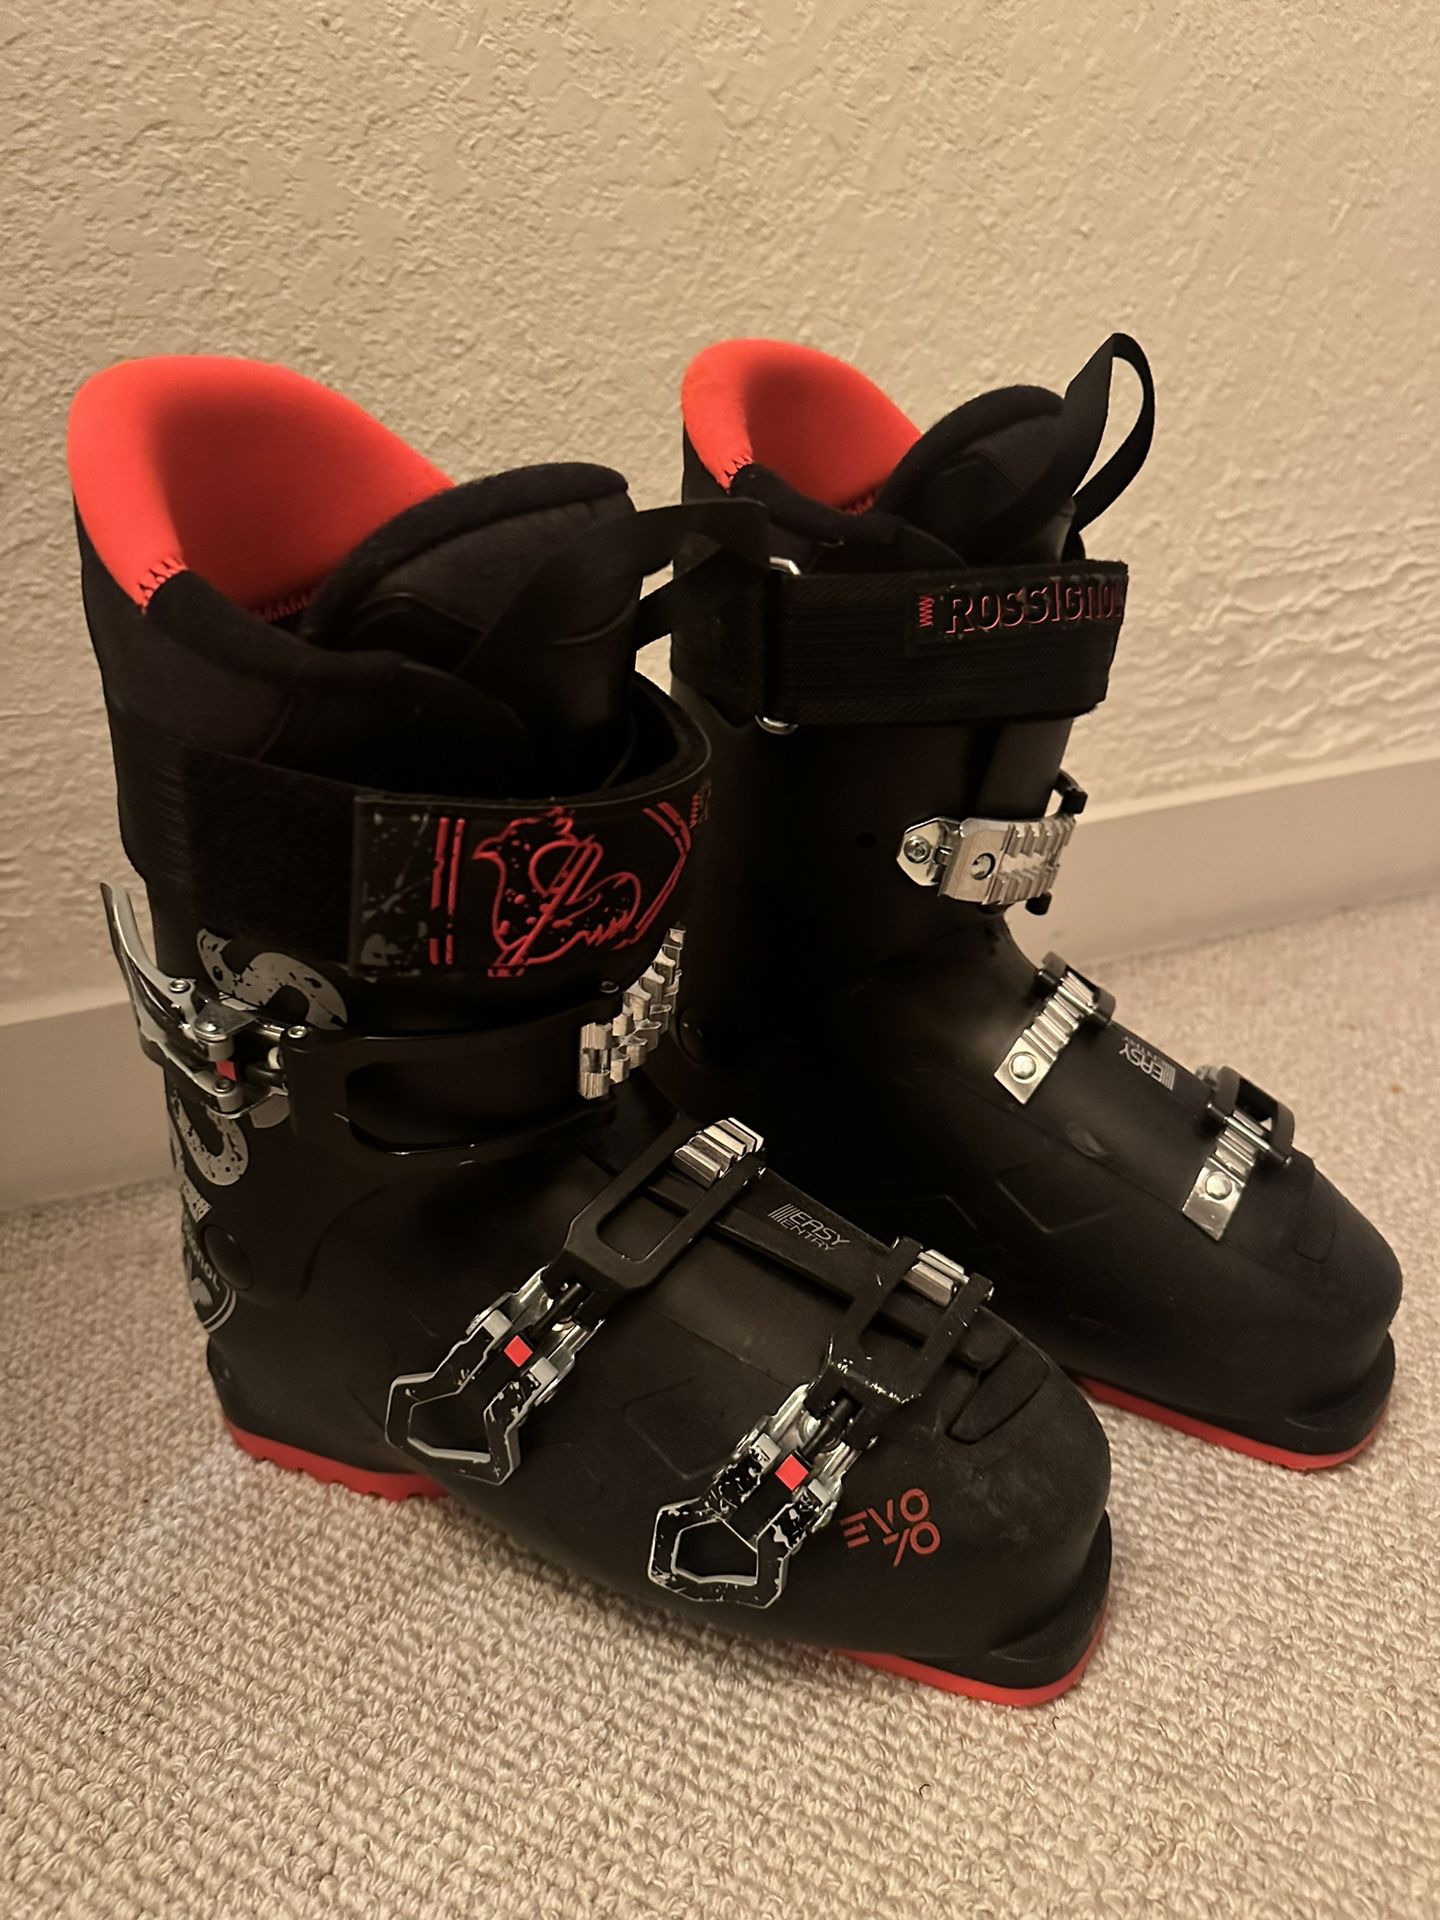 Rossignol Evo 70 Ski Boots - Size 25.5